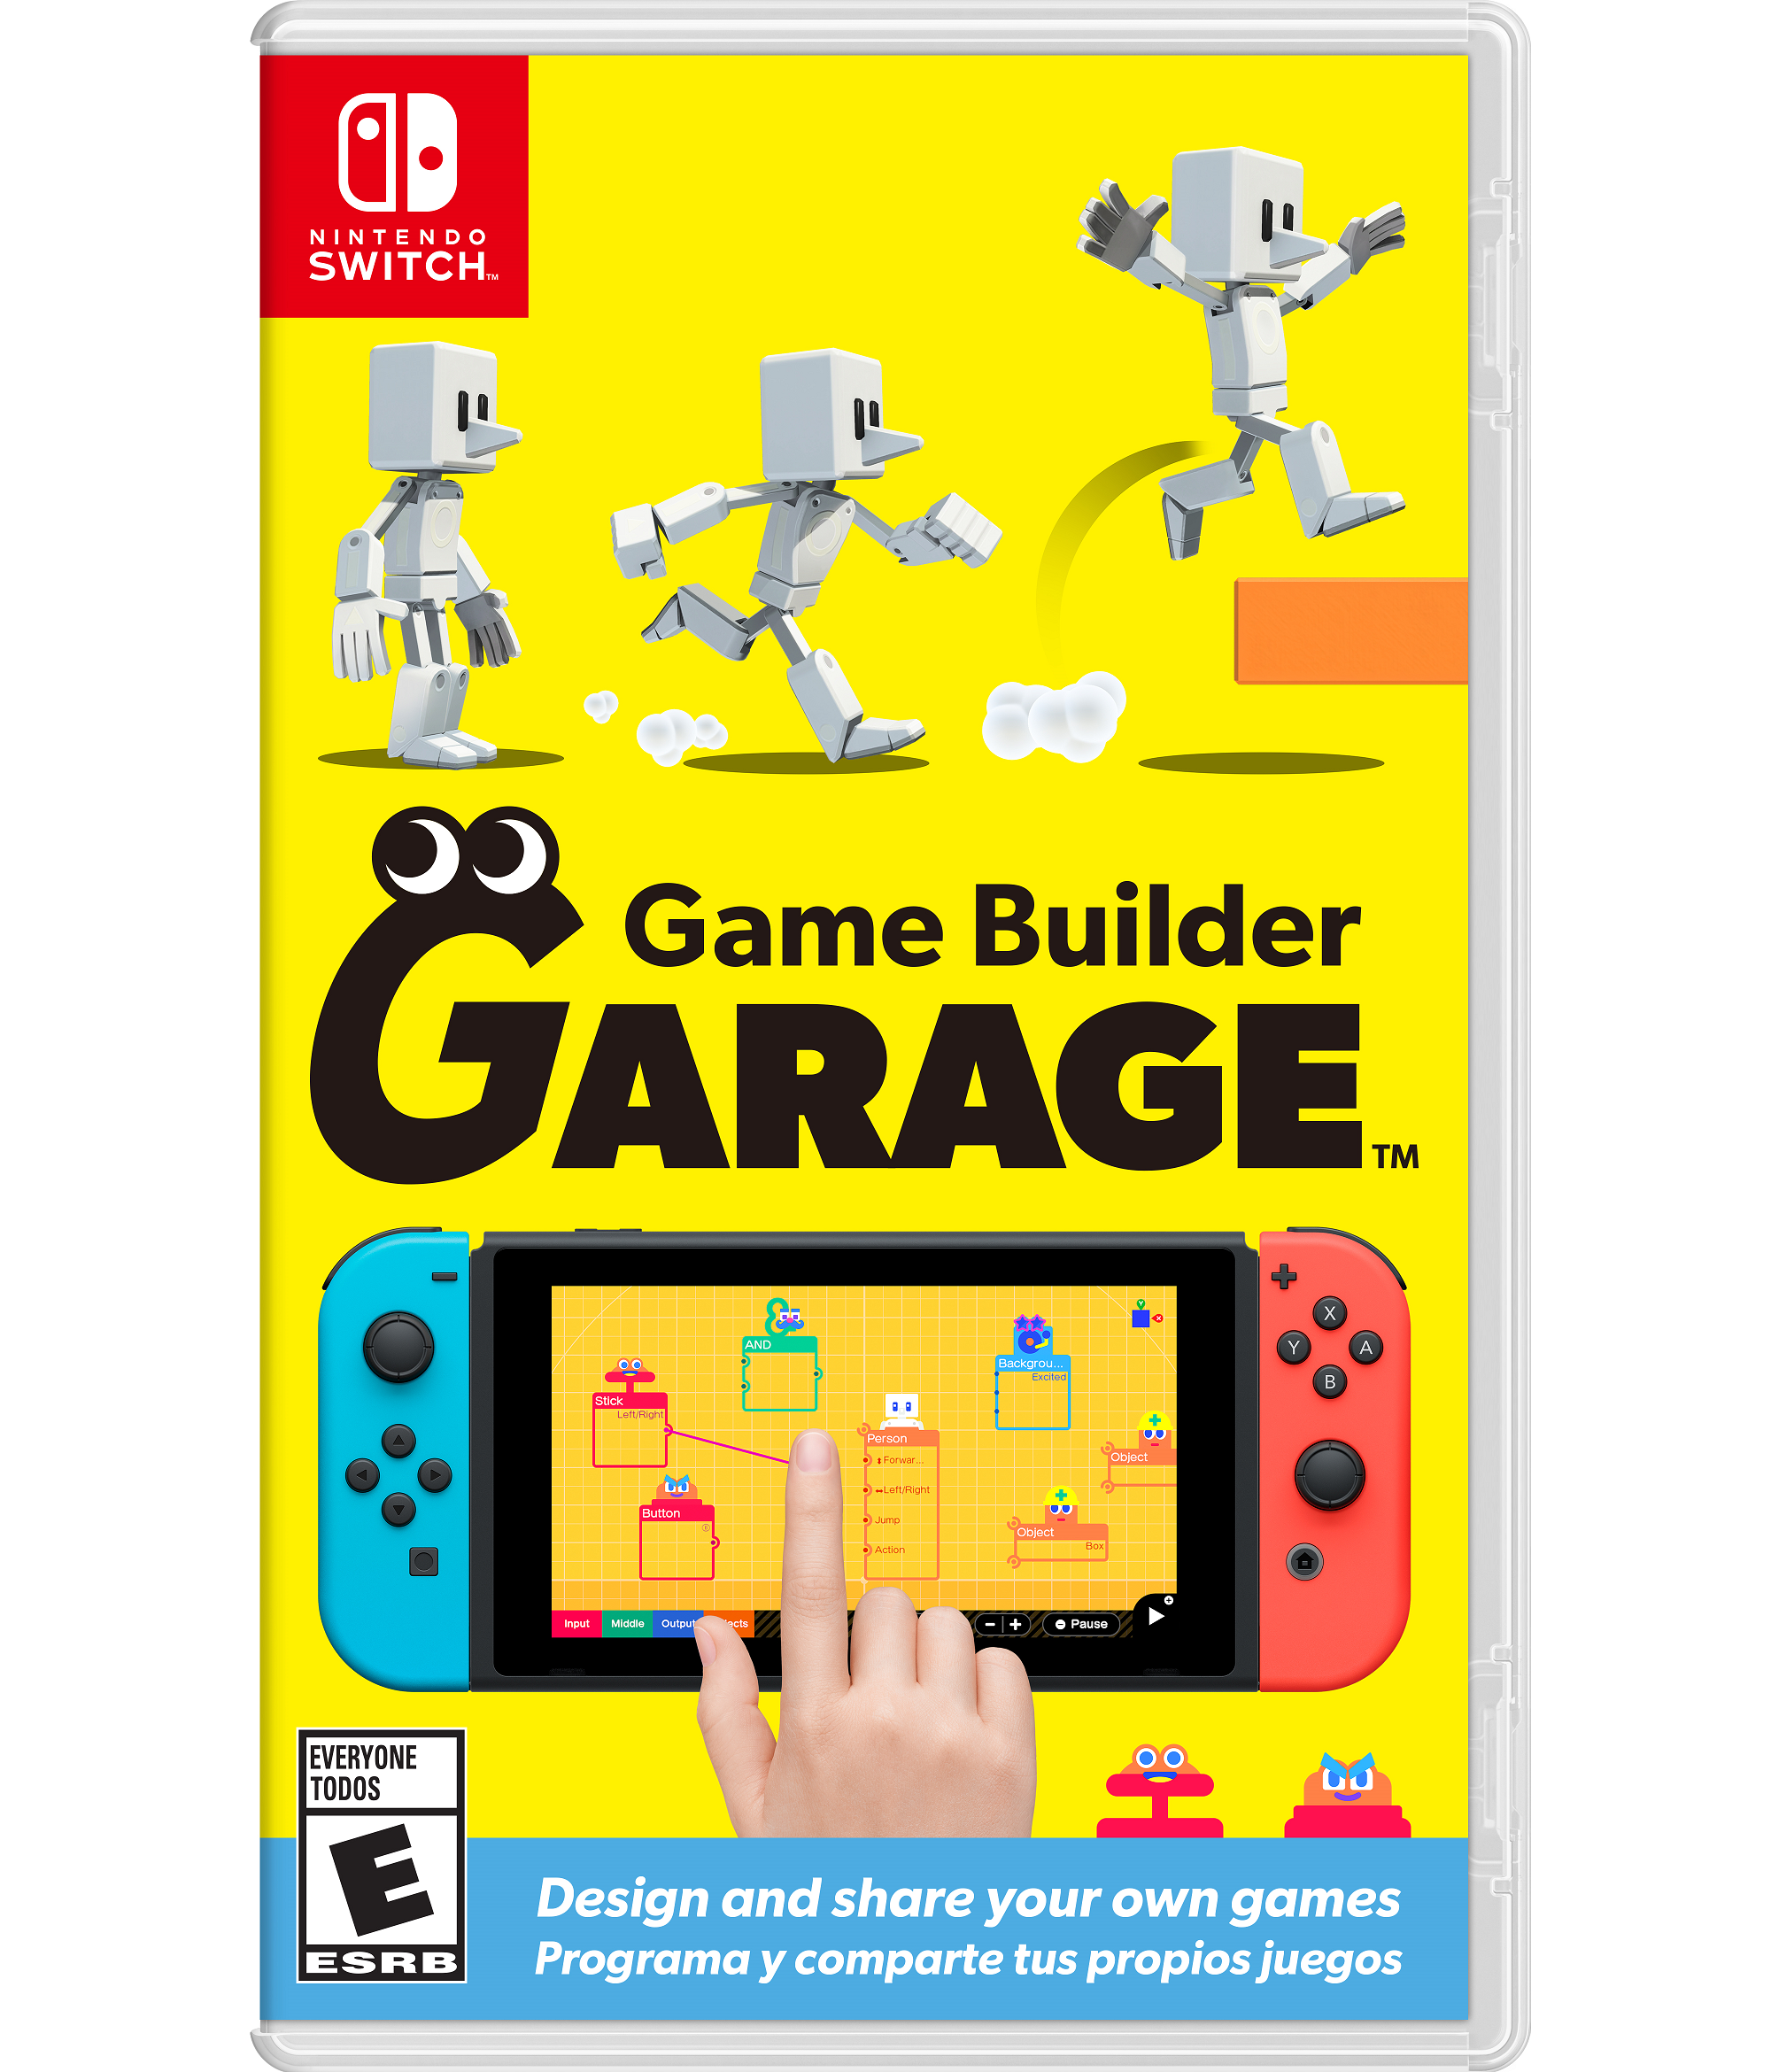 Eshop File Size Of Nintendo S New Switch Title Game Builder Garage Revealed Nintendo Life